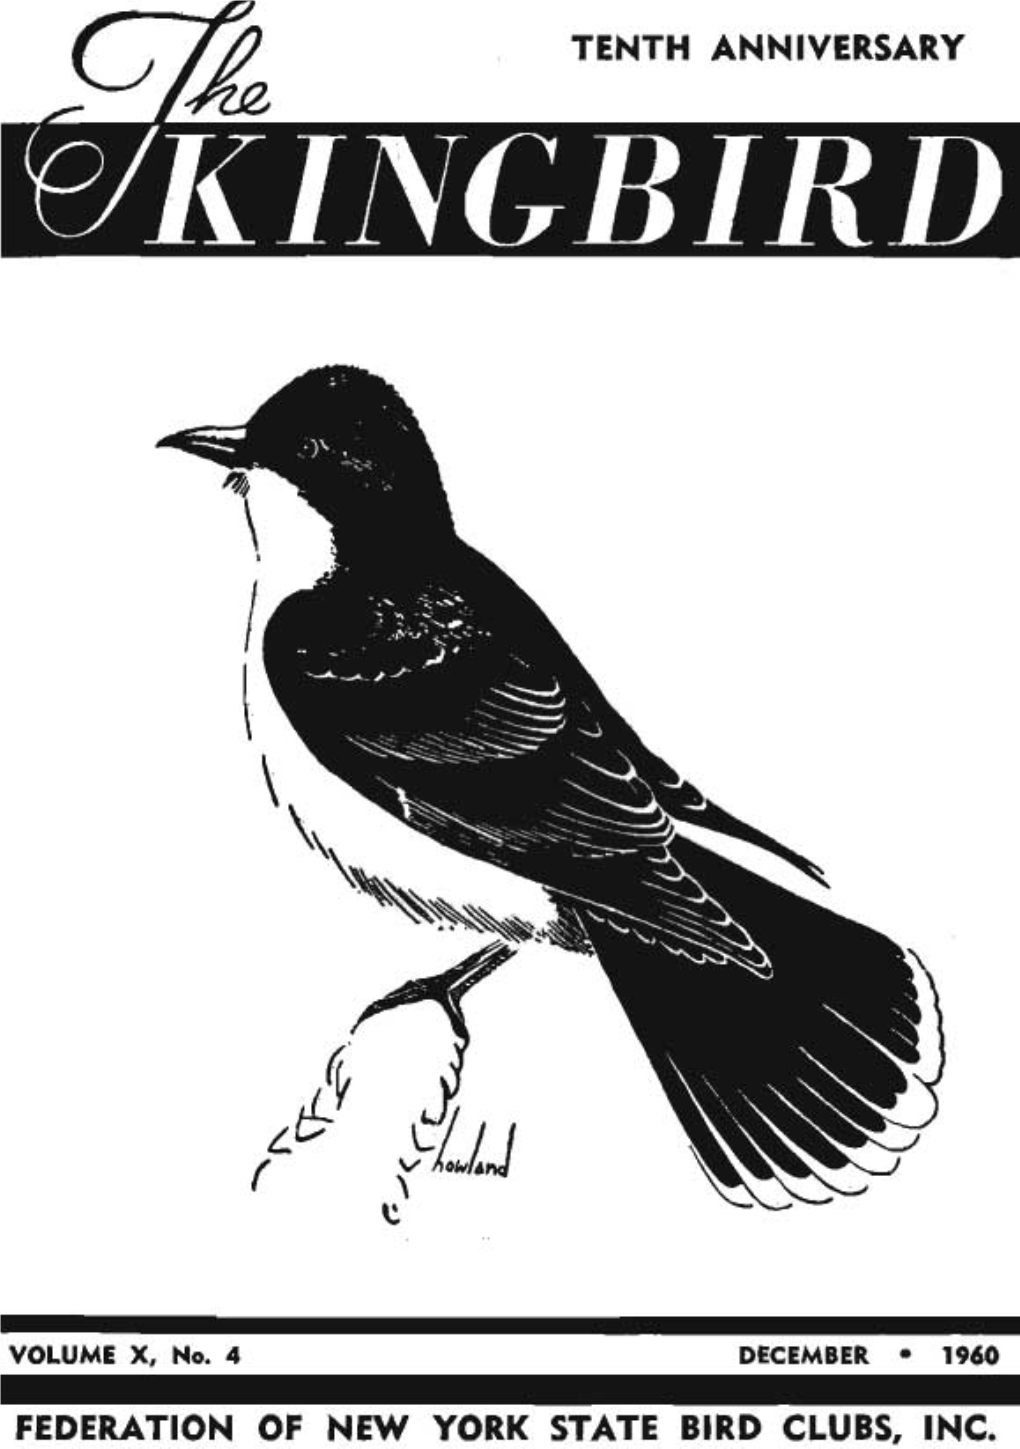 December 1960 Federation of New York State Bird Clubs, Inc